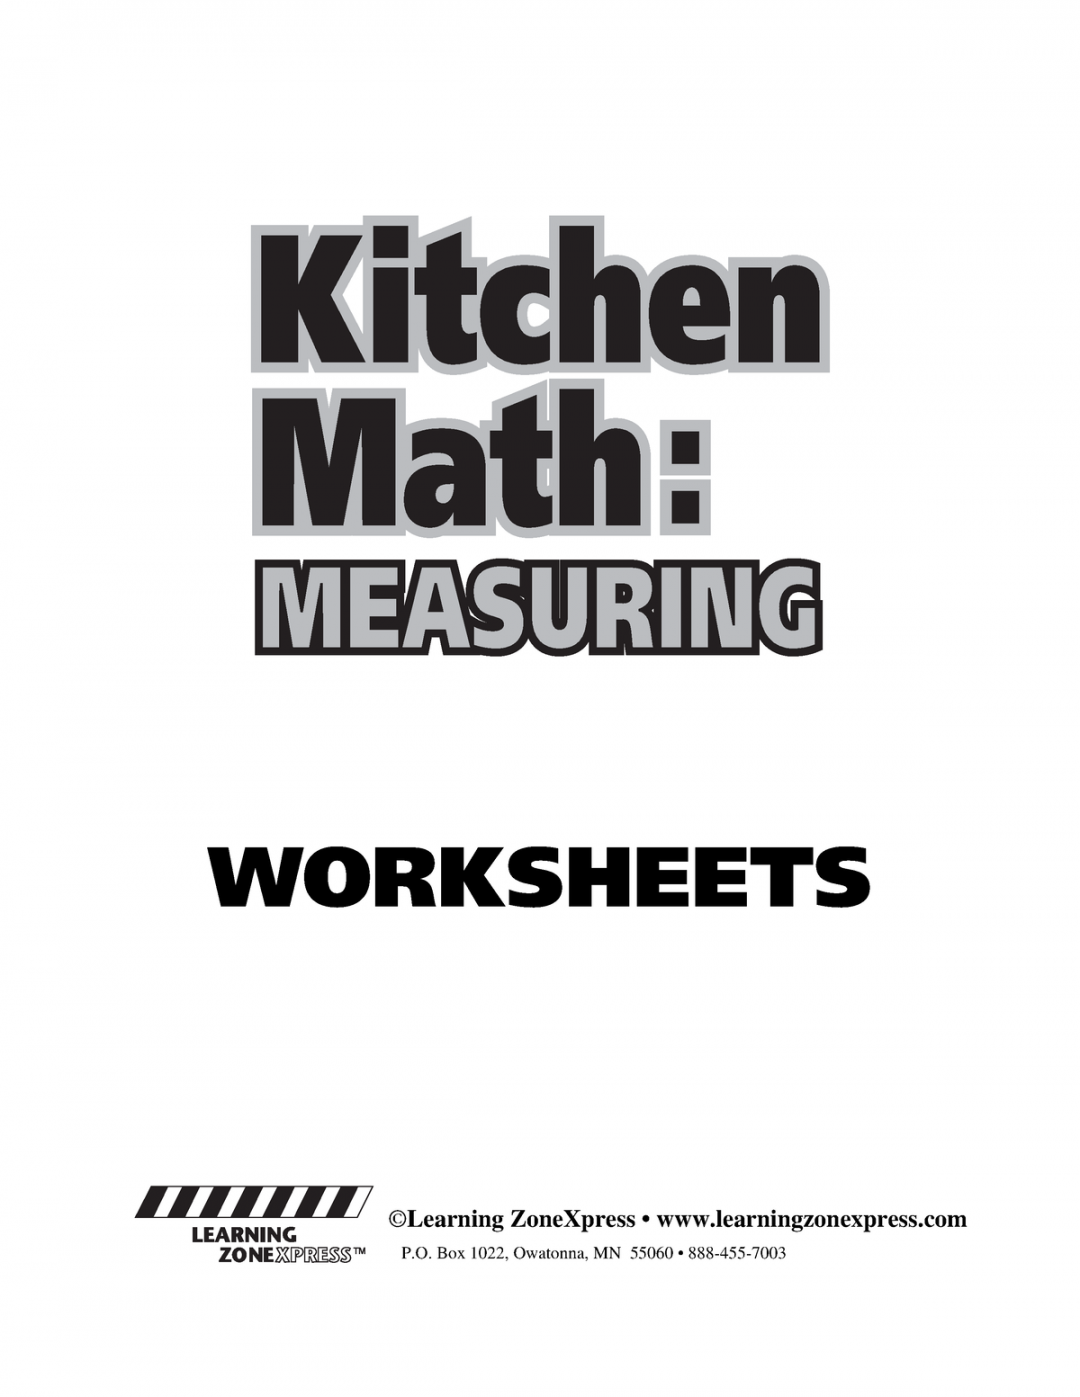 Kitchen math worksheets - WORKSHEETS © Learning ZoneXpress